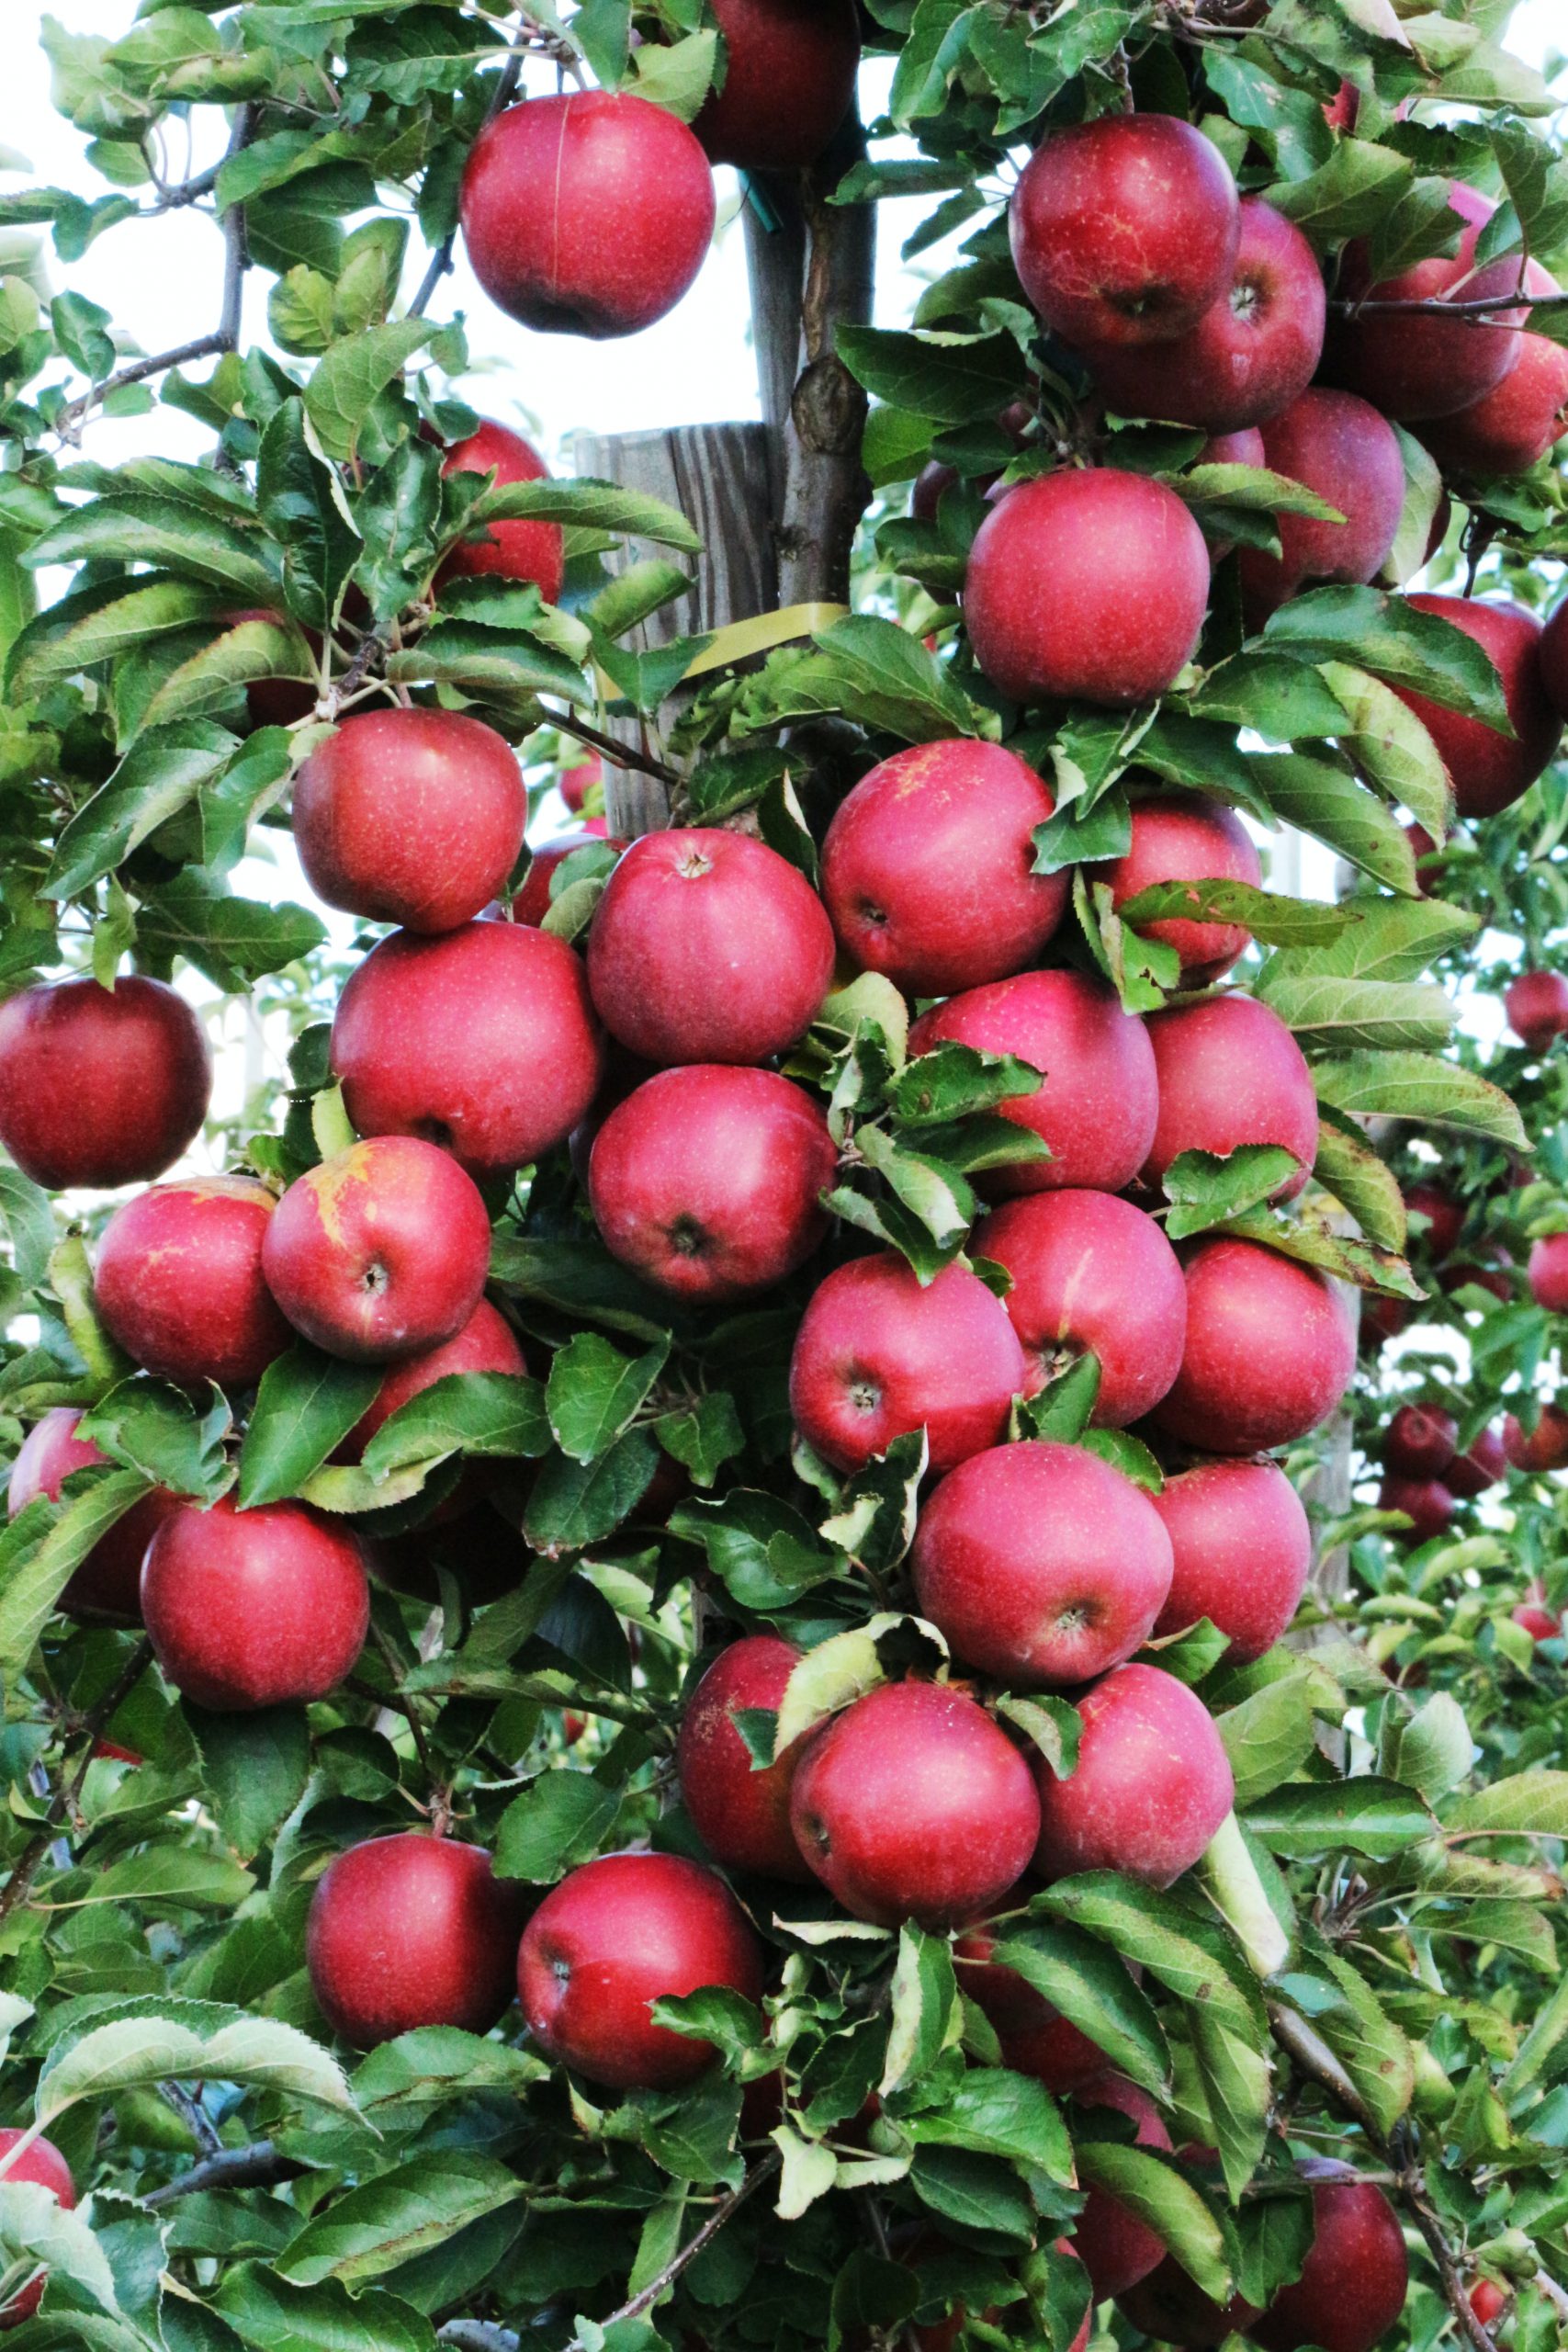 How Many Apples Does One Tree Produce?